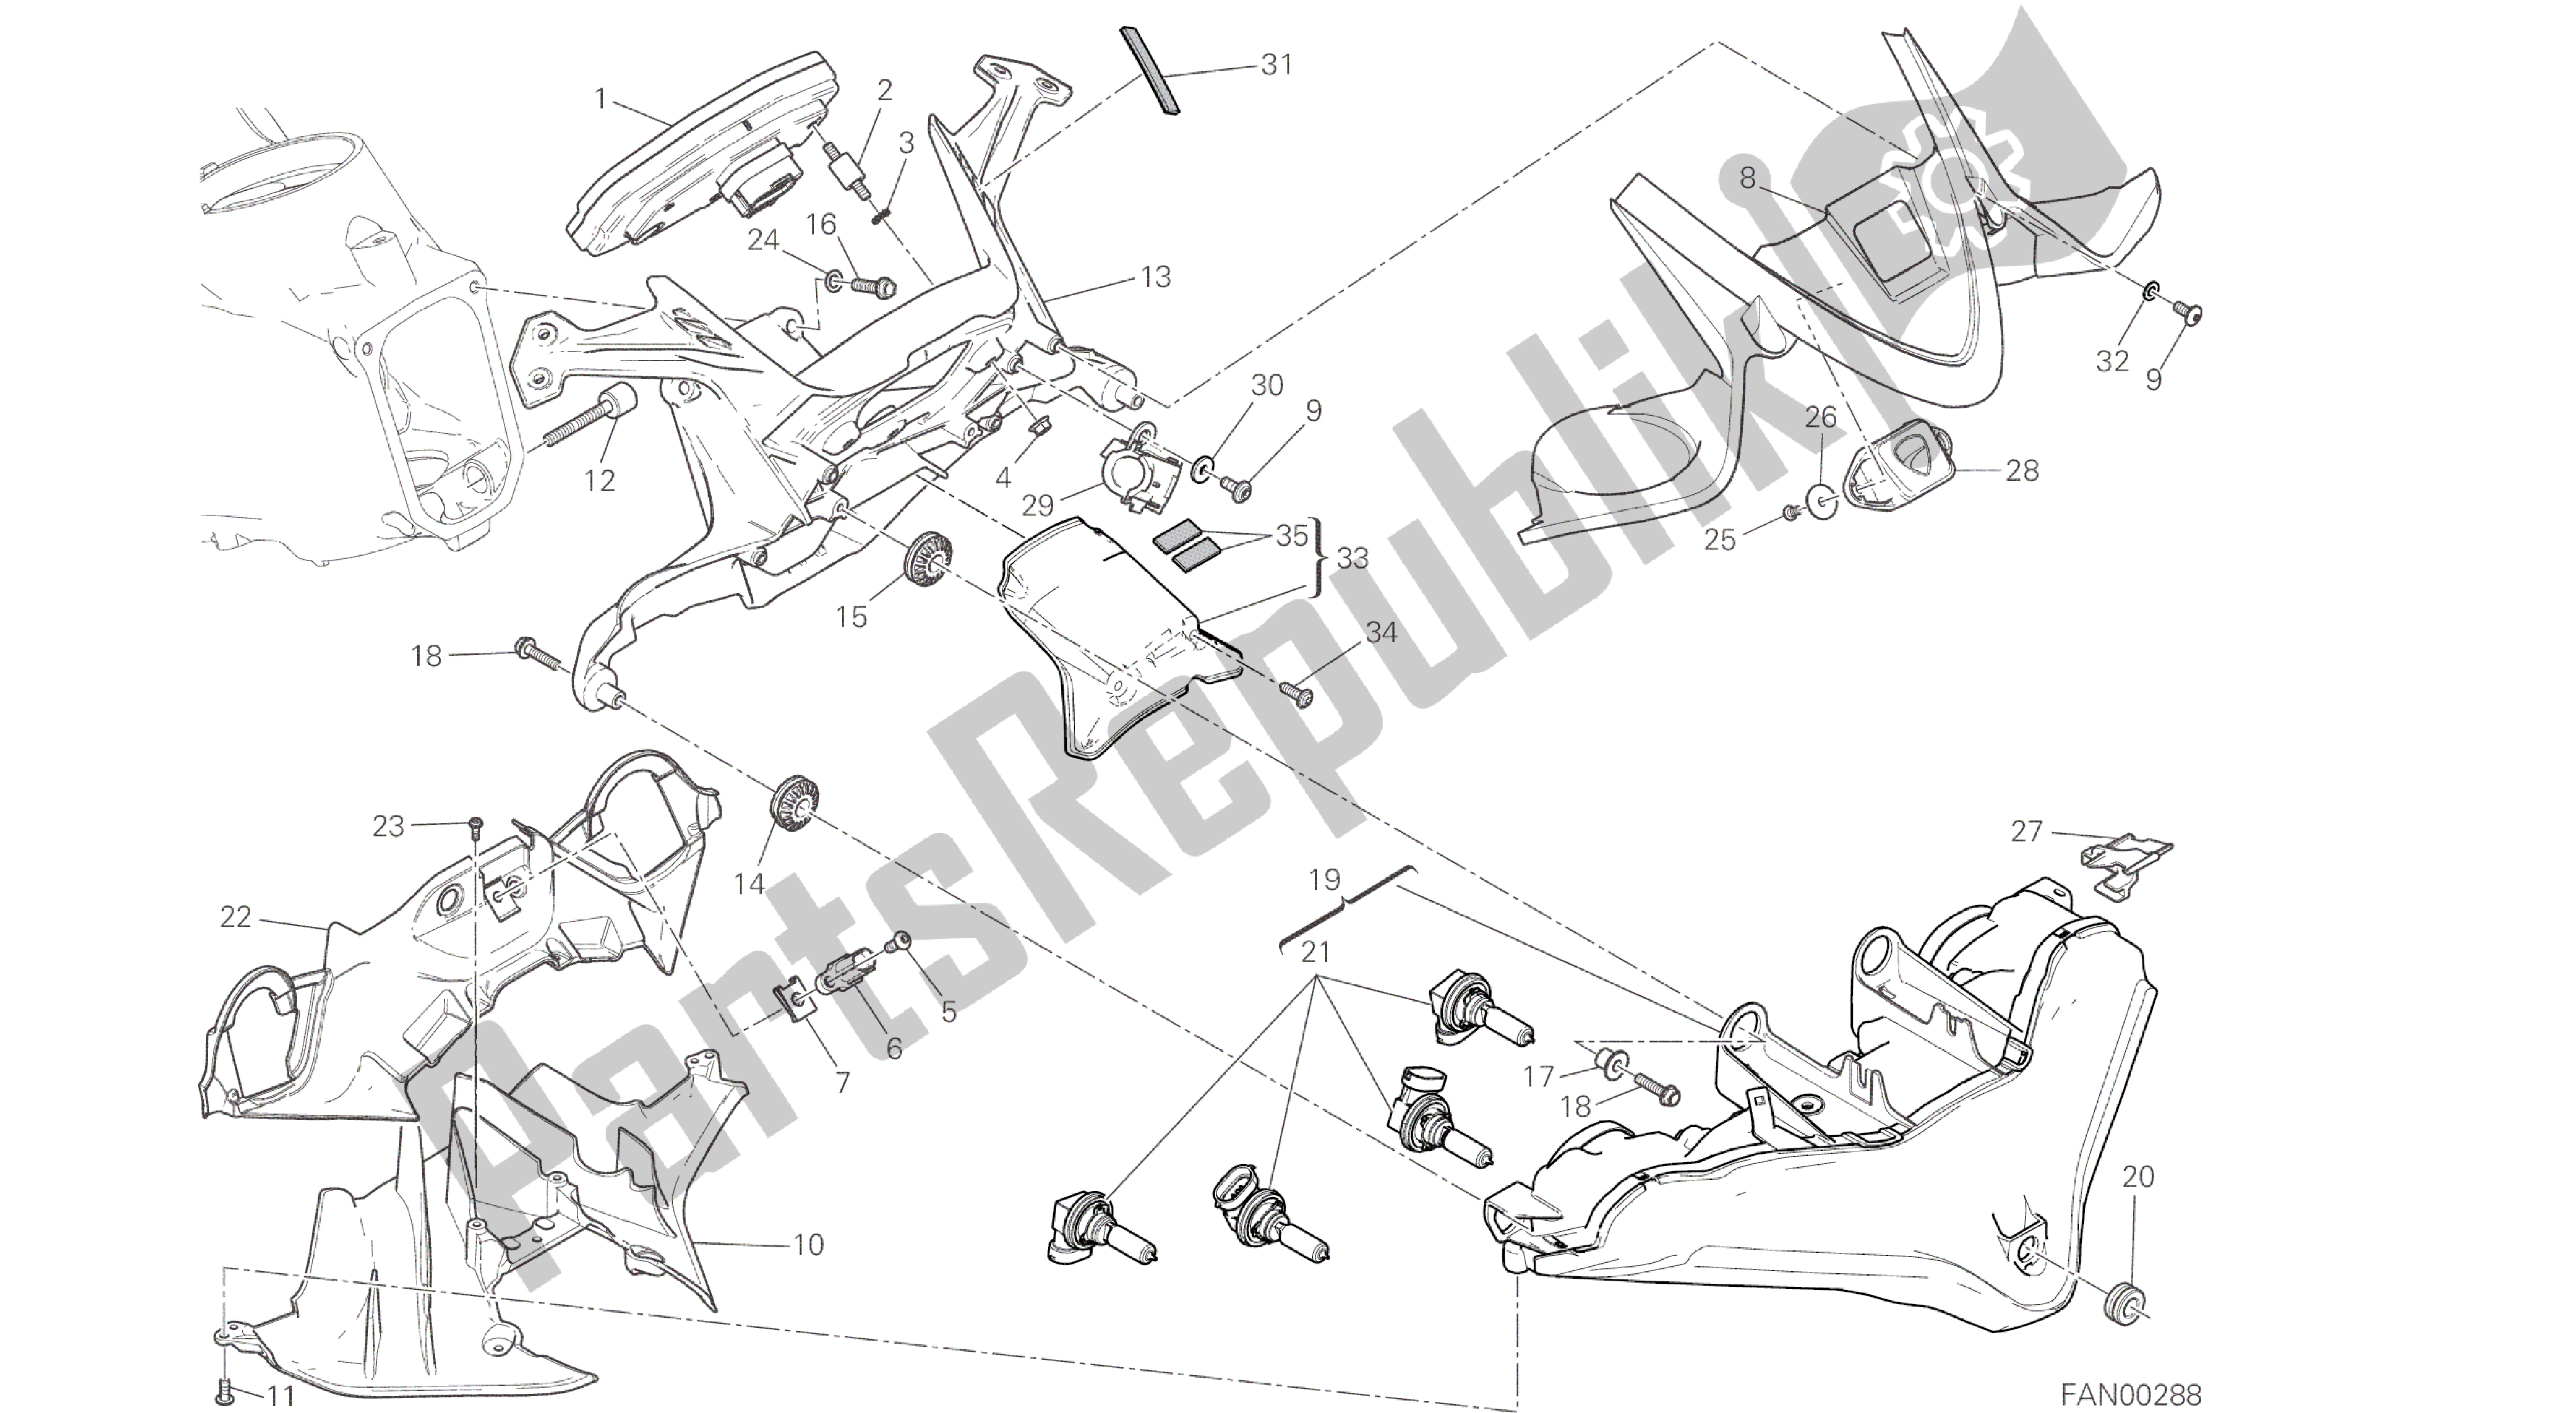 Alle onderdelen voor de Tekening 020 - Fanale Anteriore E Cruscotto [mod: 959. 959aws; Xst: Aus, Eur, Fra, Jap, Twn] Groepsframe van de Ducati Panigale 959 2016